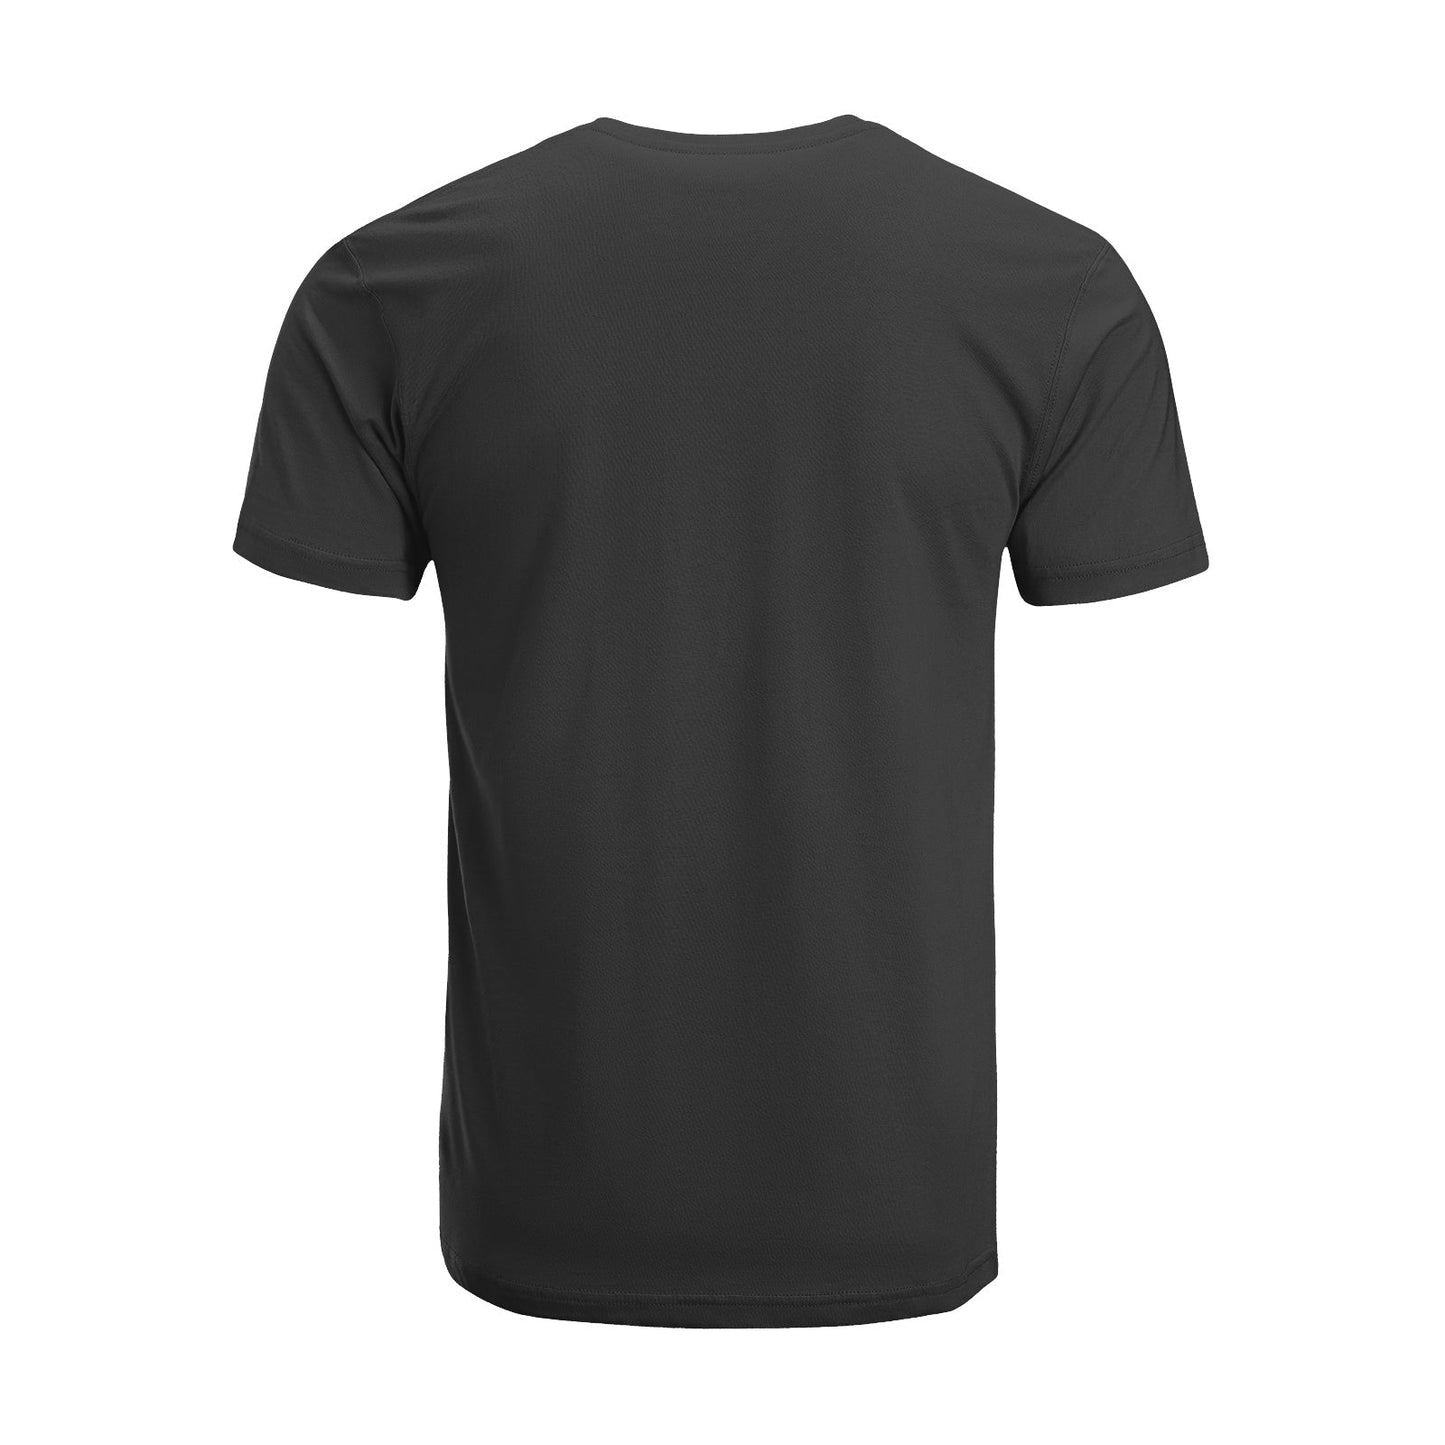 Unisex Short Sleeve Crew Neck Cotton Jersey T-Shirt Gym No. 08 - Tara-Outfits.com